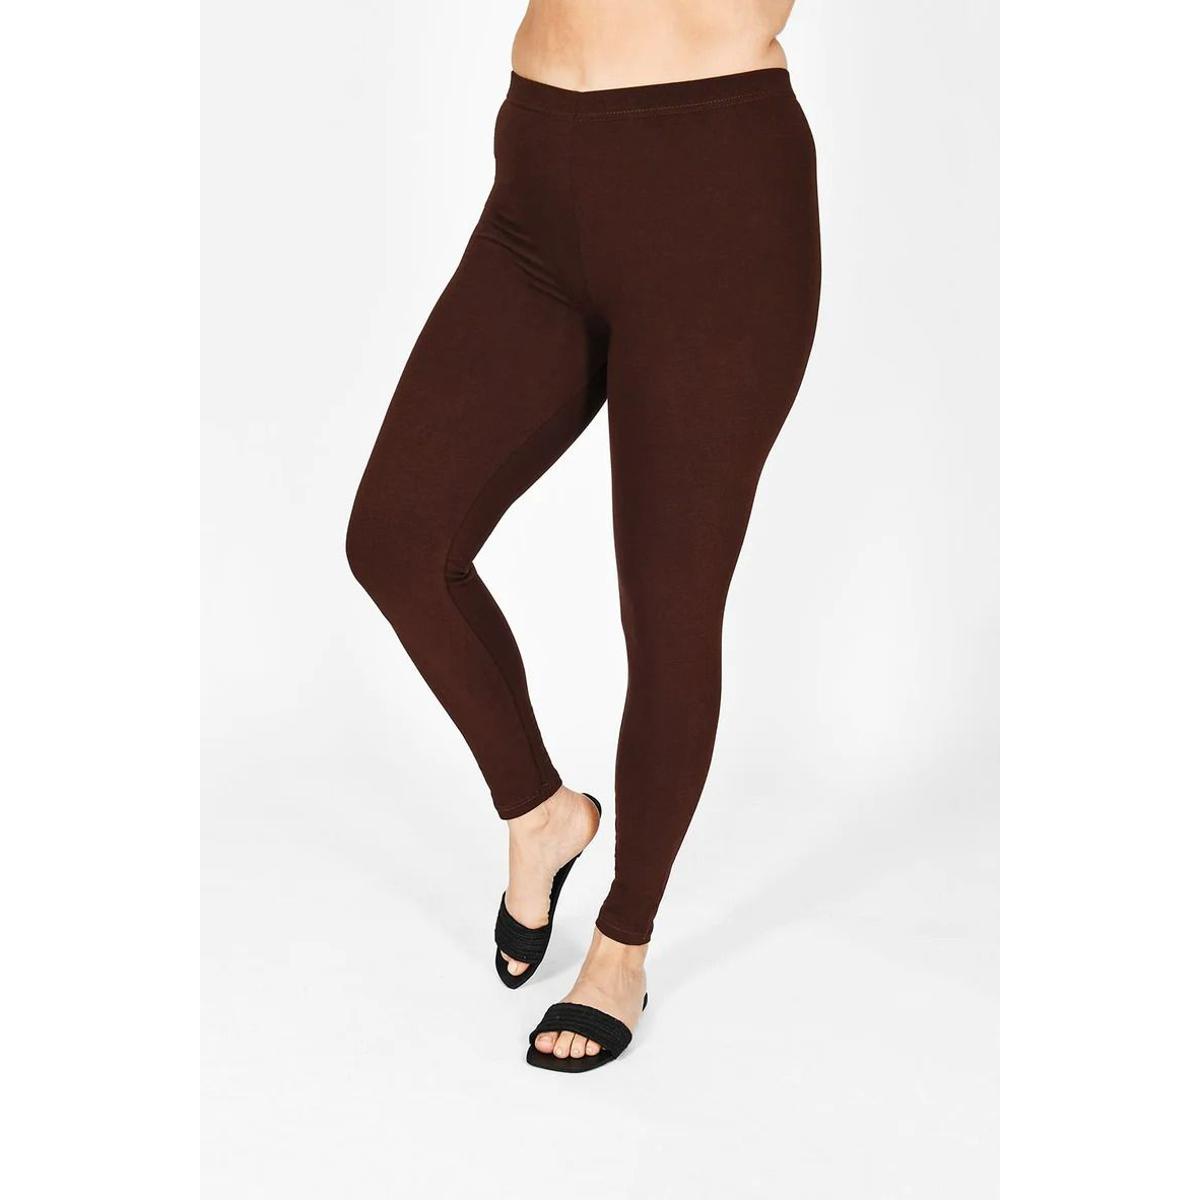 Dark Brown lycra Tights/leggings for ladies/girls/women Highly